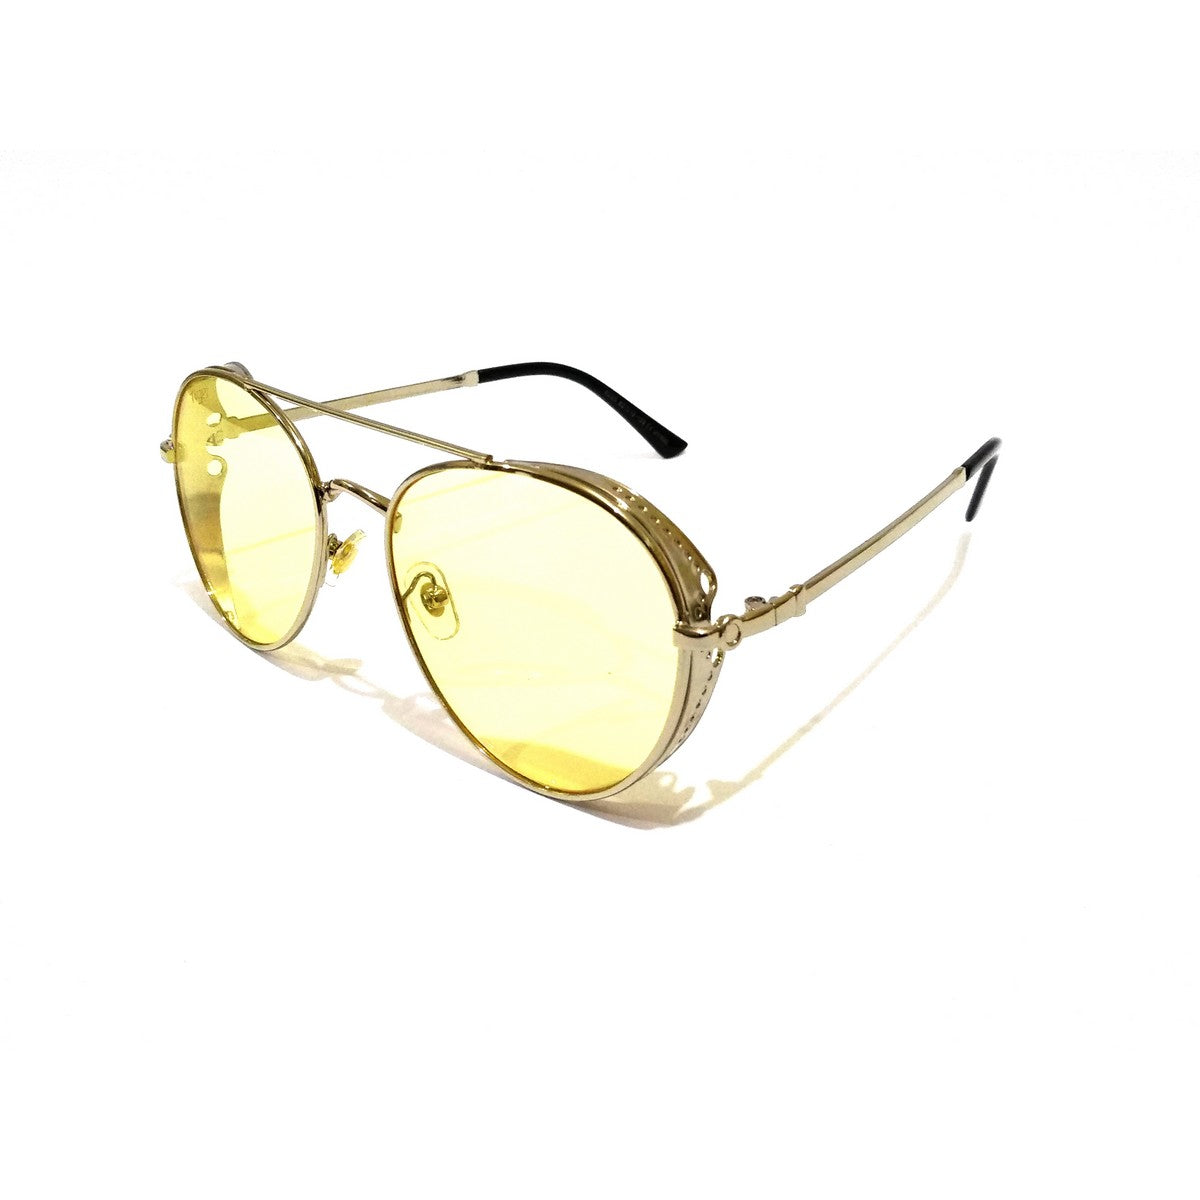 Aviators Style Silver Sunglasses Yellow Lens